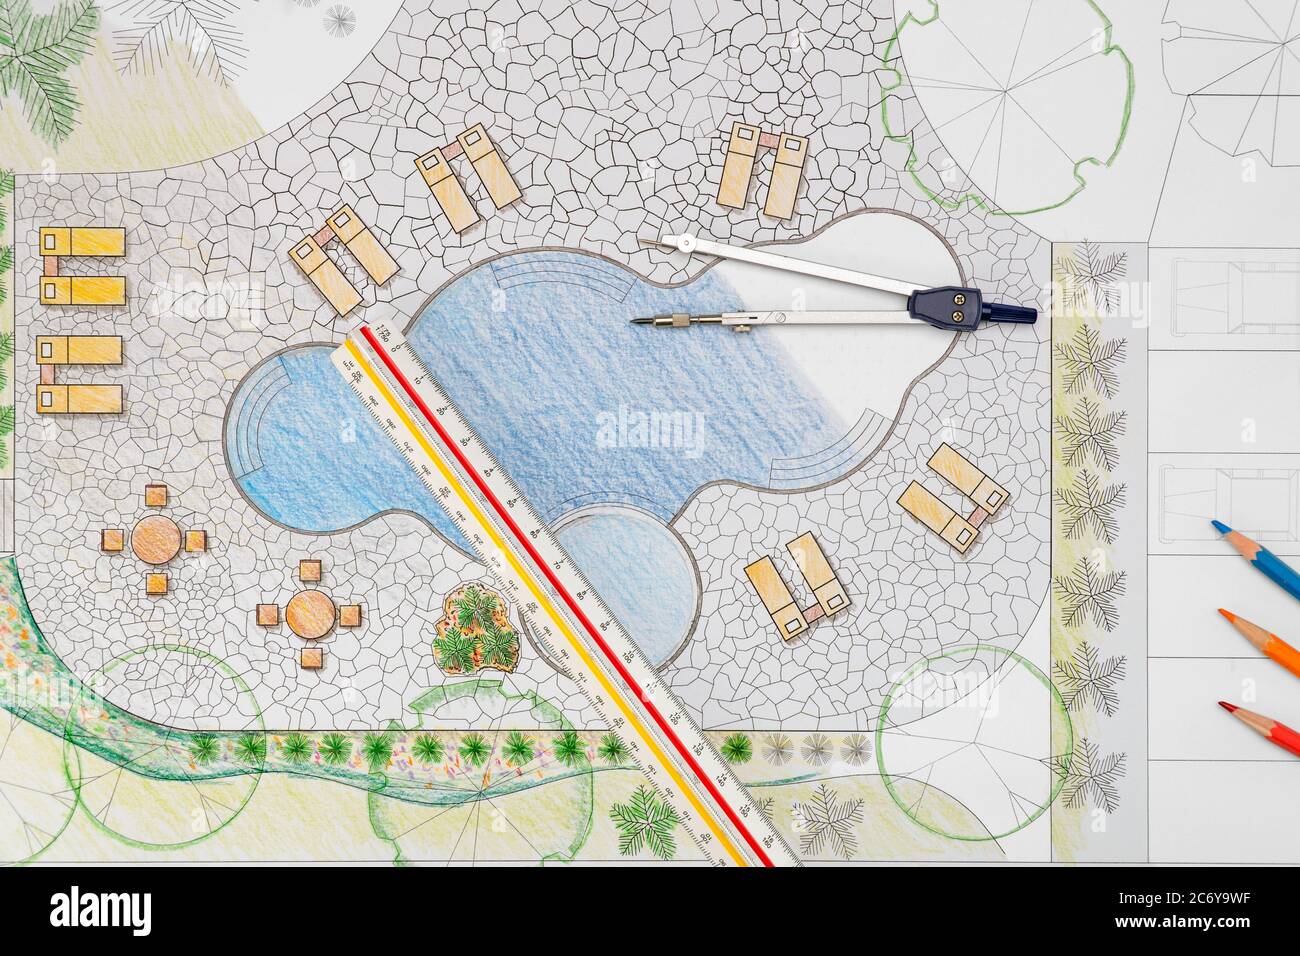 Landscape architect design backyard pool plan for resort Stock Photo